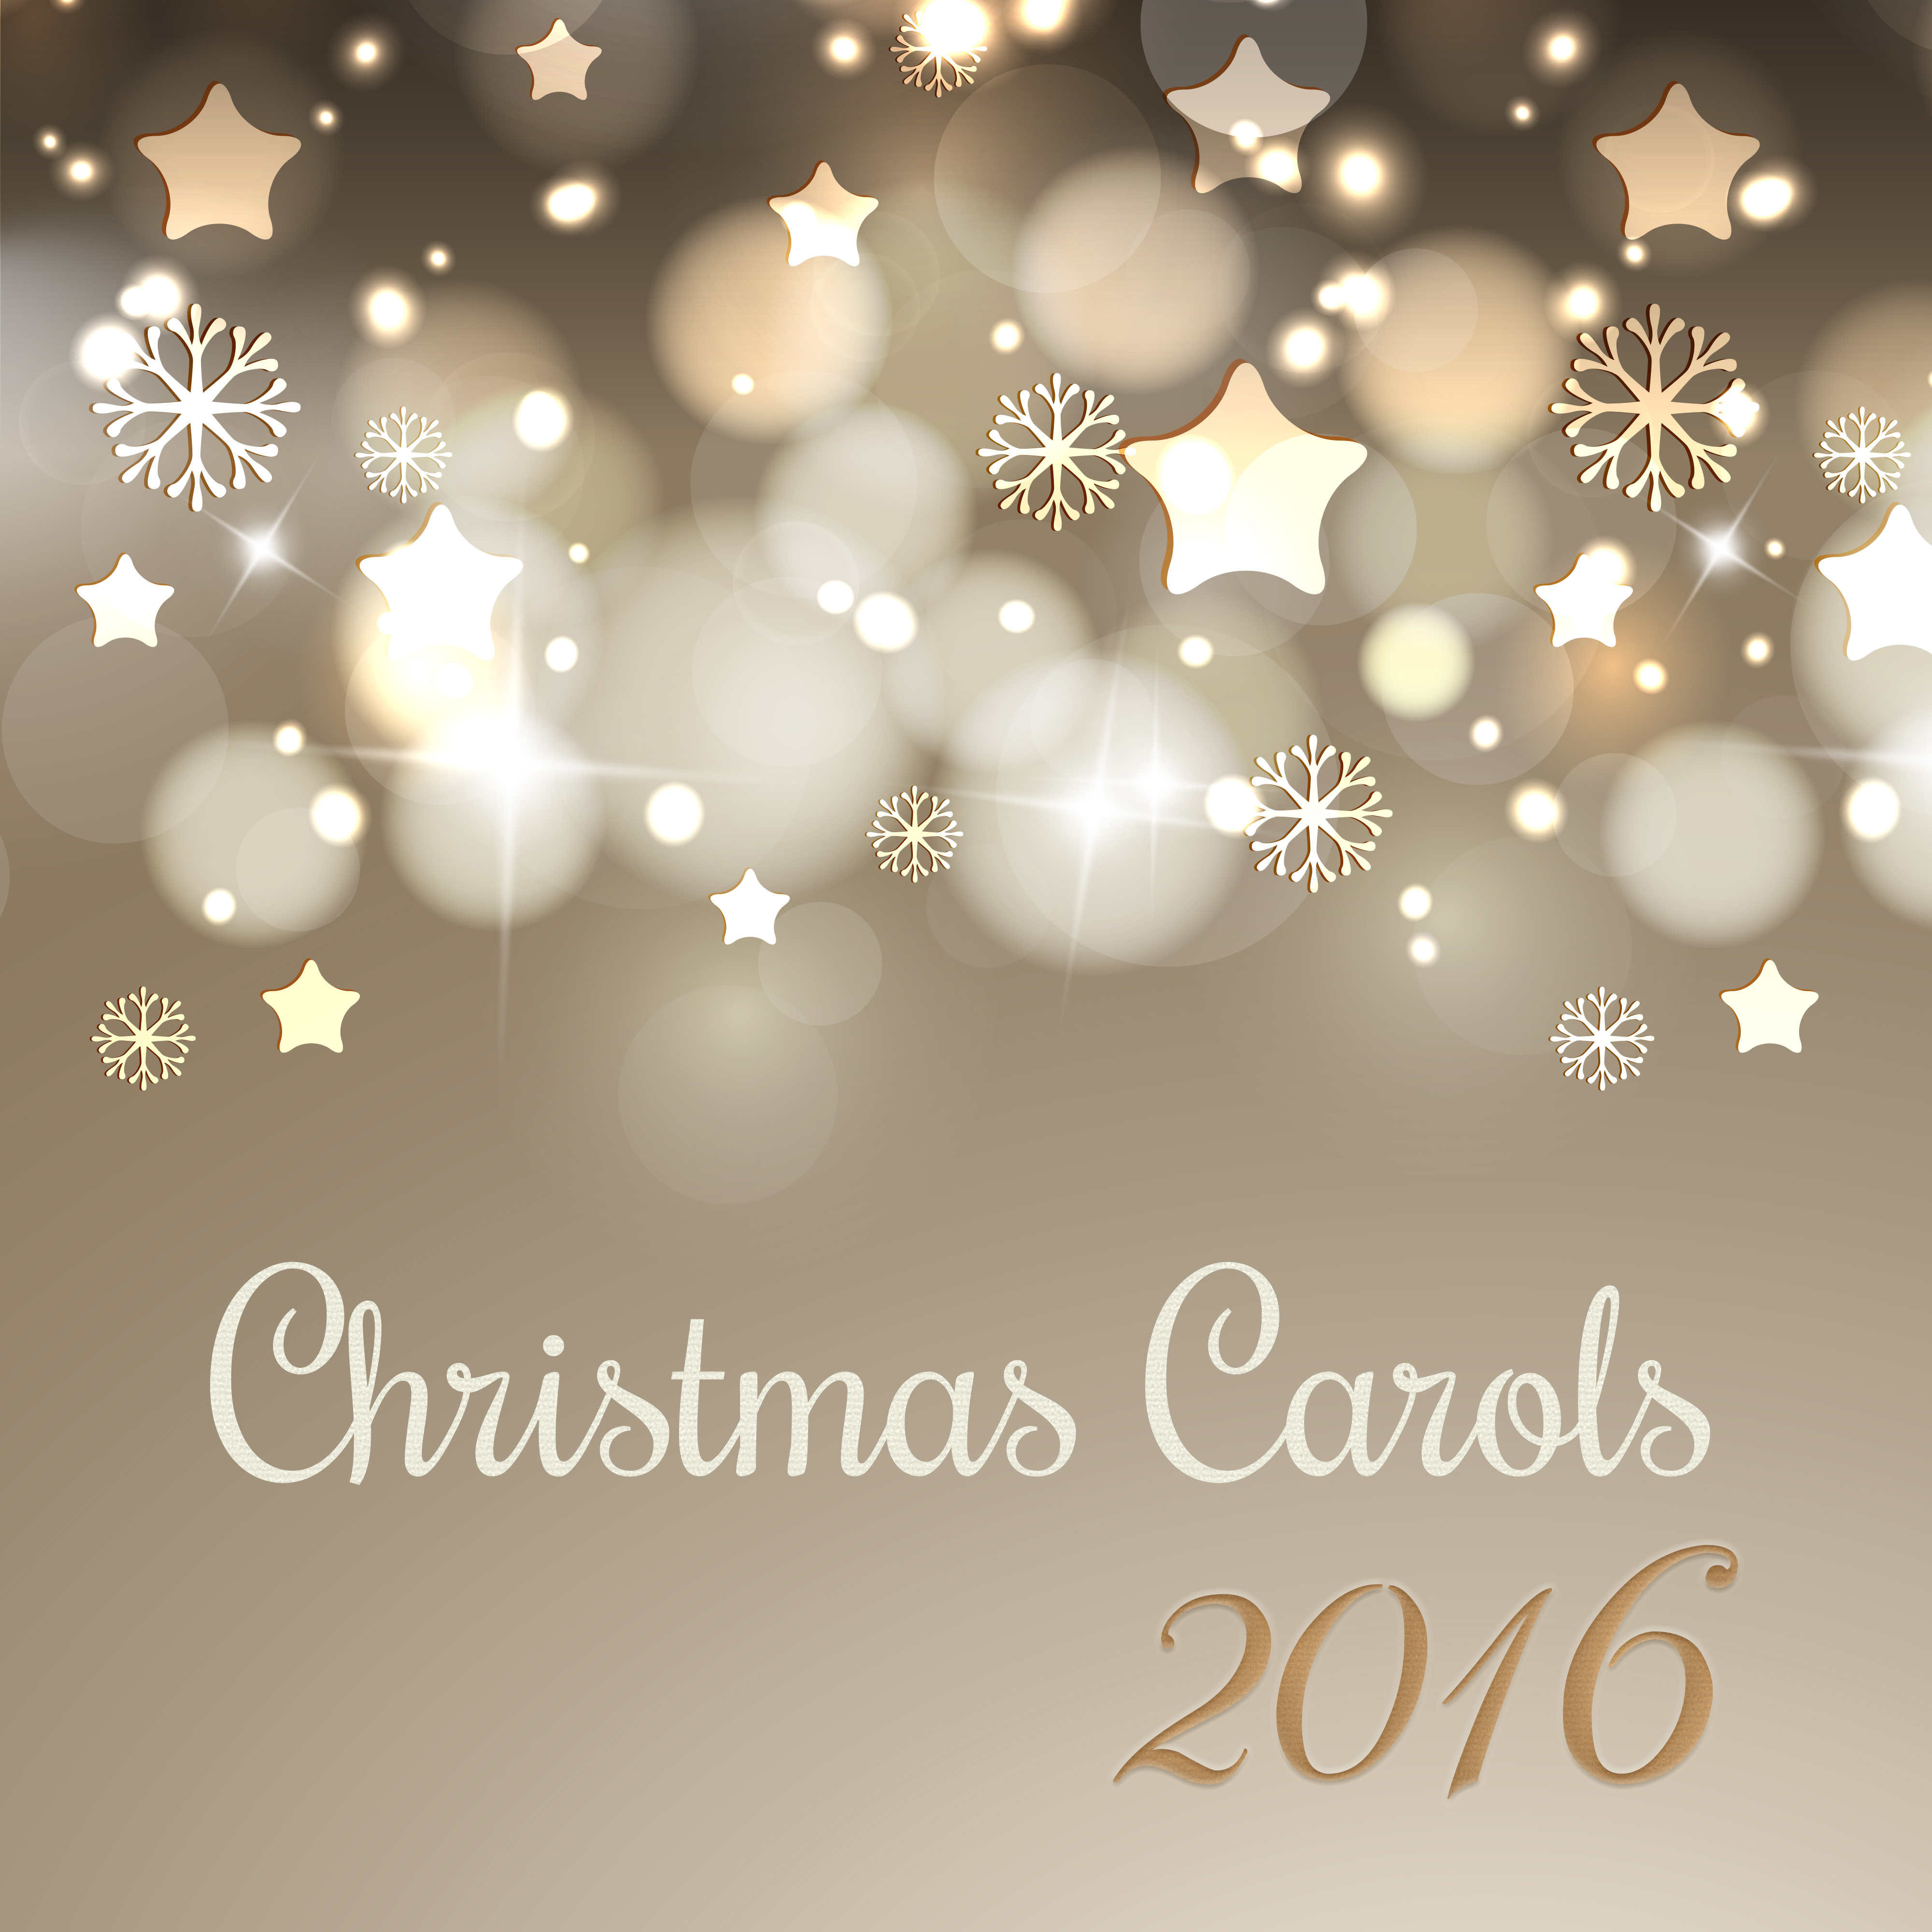 Christmas Carols 2016 - Merry Christmas Songs, Best Instrumental Piano Christmas Carols 2016